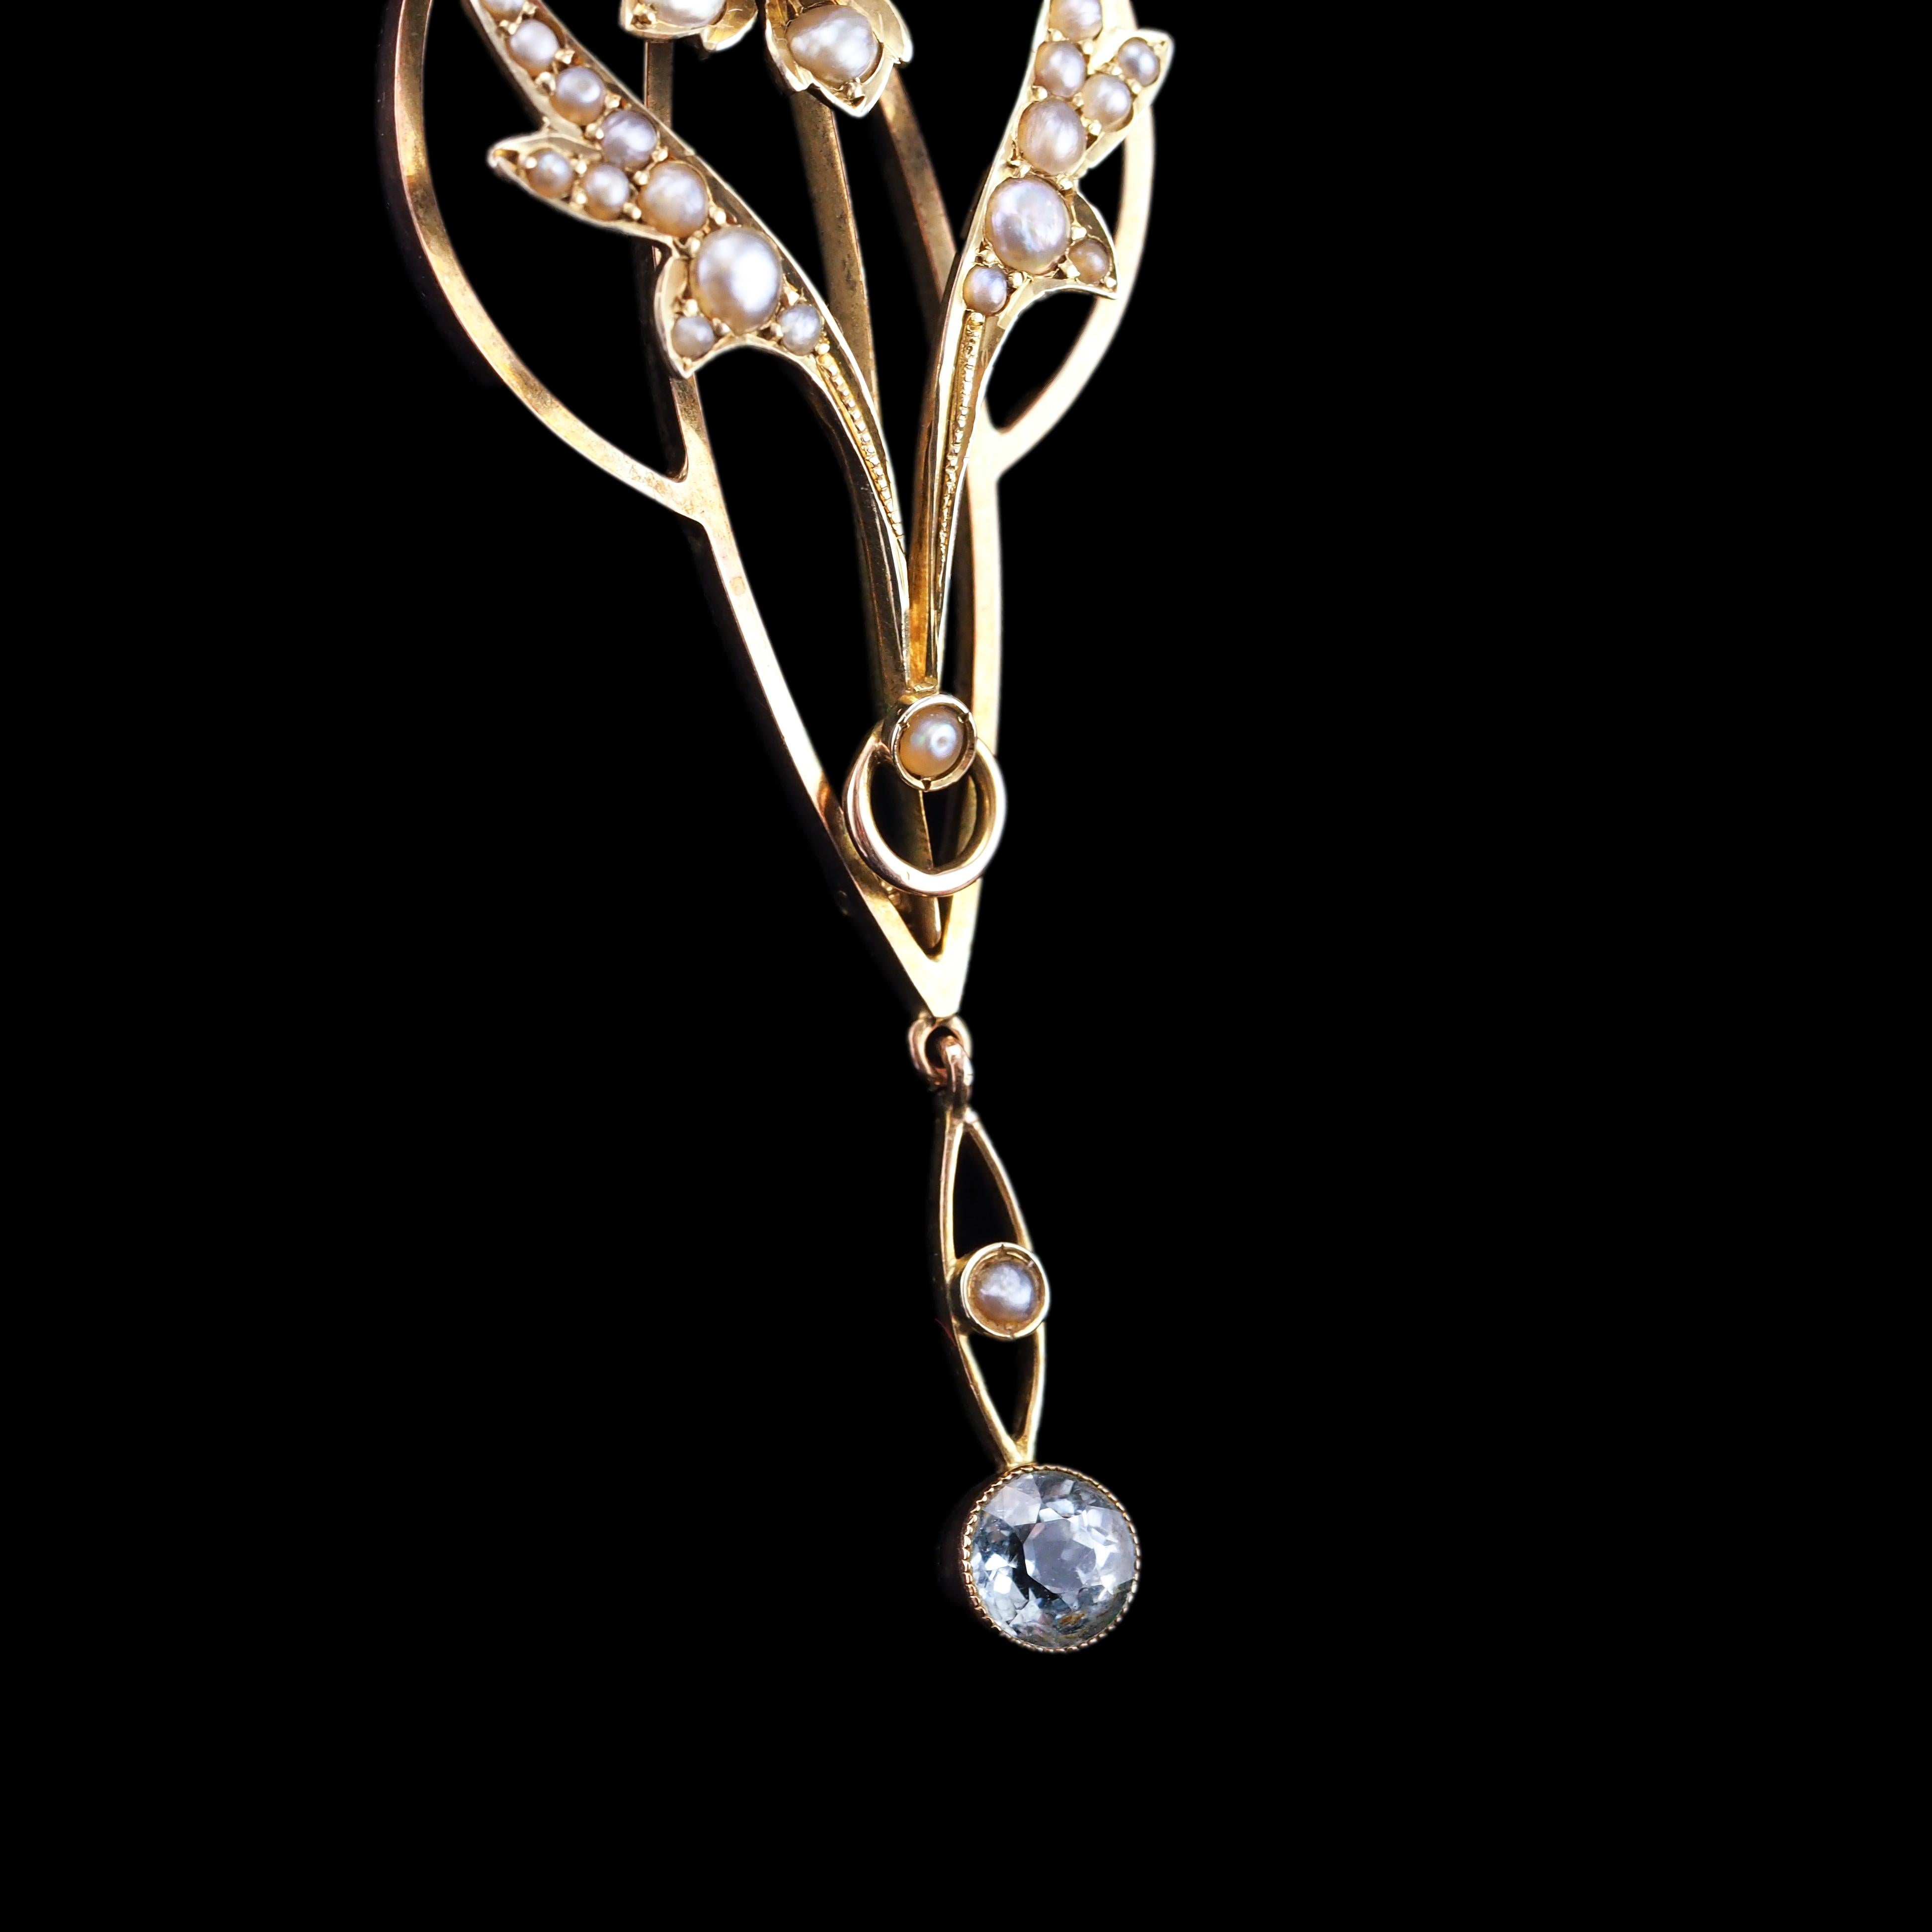 Antike Aquamarin-Halskette mit Anhänger, Halskette mit Saatperlen, 9K Gold, Jugendstil ca. 1905 8